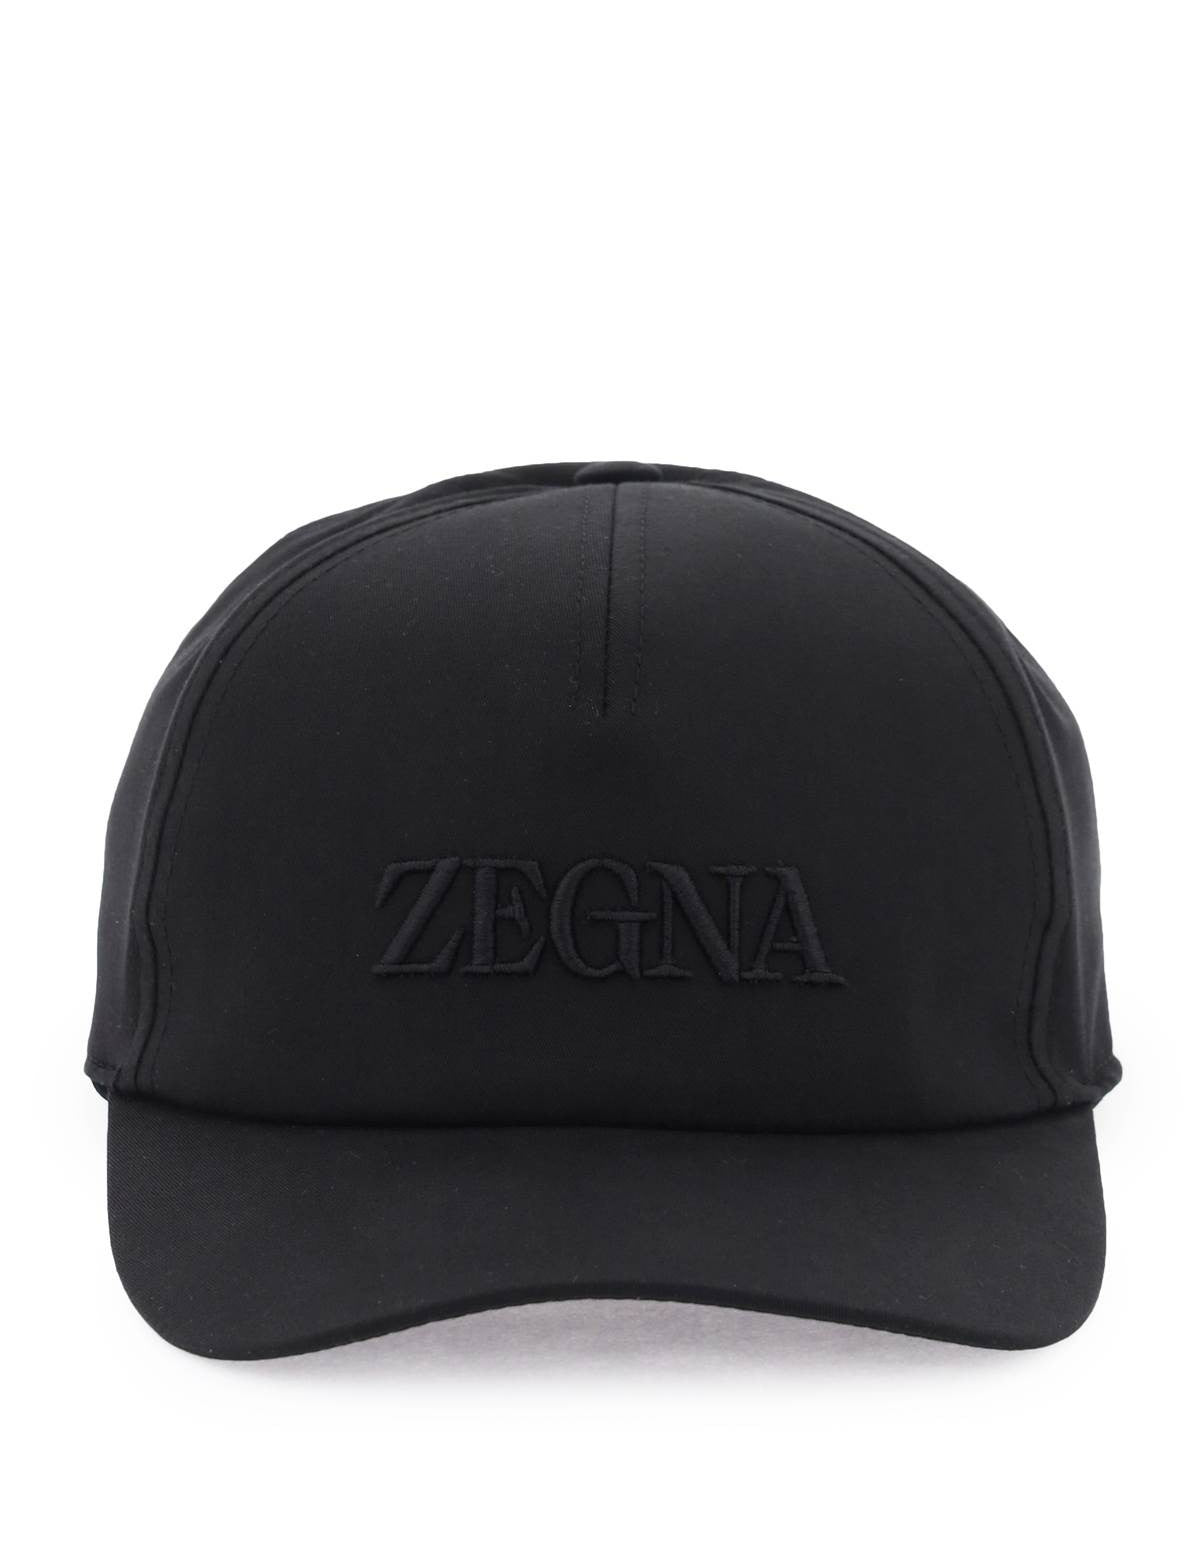 zegna-baseball-cap-with-logo-embroidery_20c76a89-6df1-409e-a657-dd46c46dac69.jpg